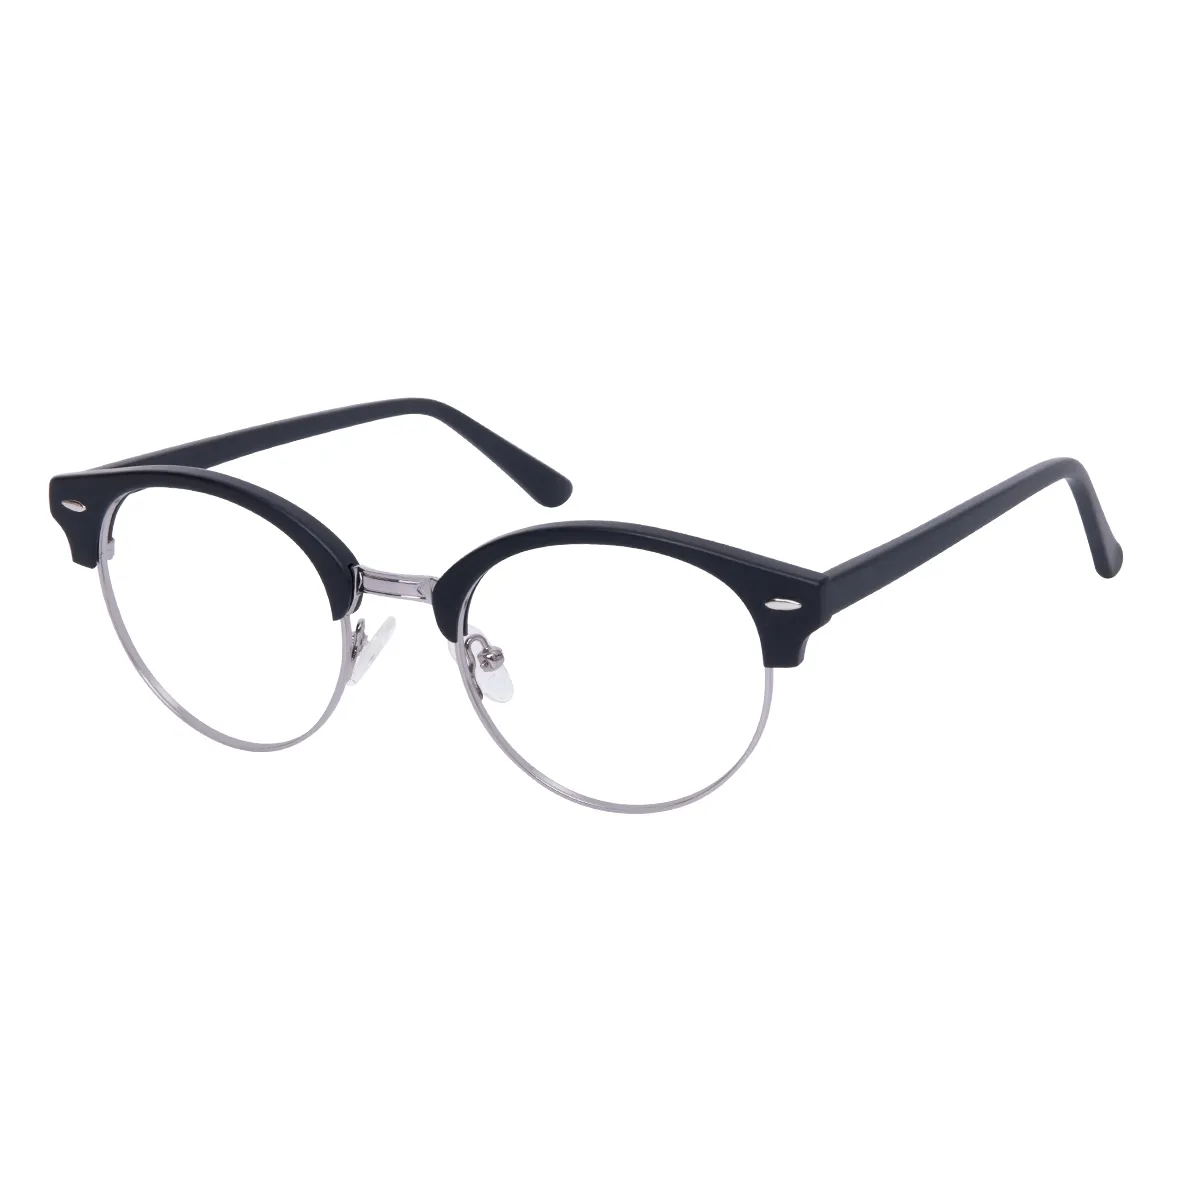 Alaric - Browline Matte Black Glasses for Men & Women